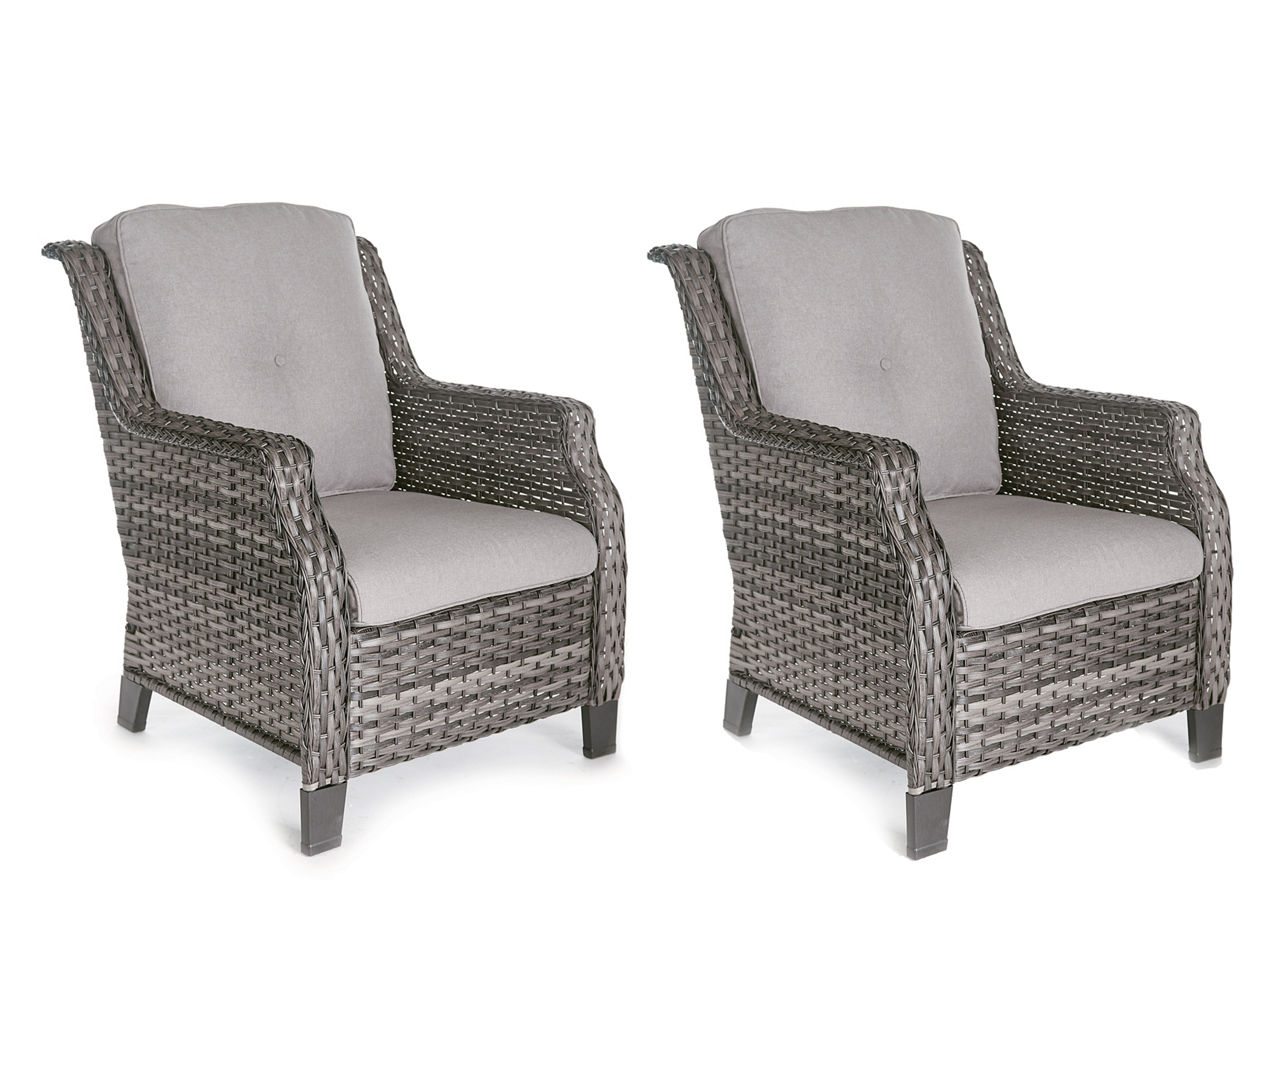 Rockbridge Gray Wicker Cushioned Patio Chairs, 2-Pack